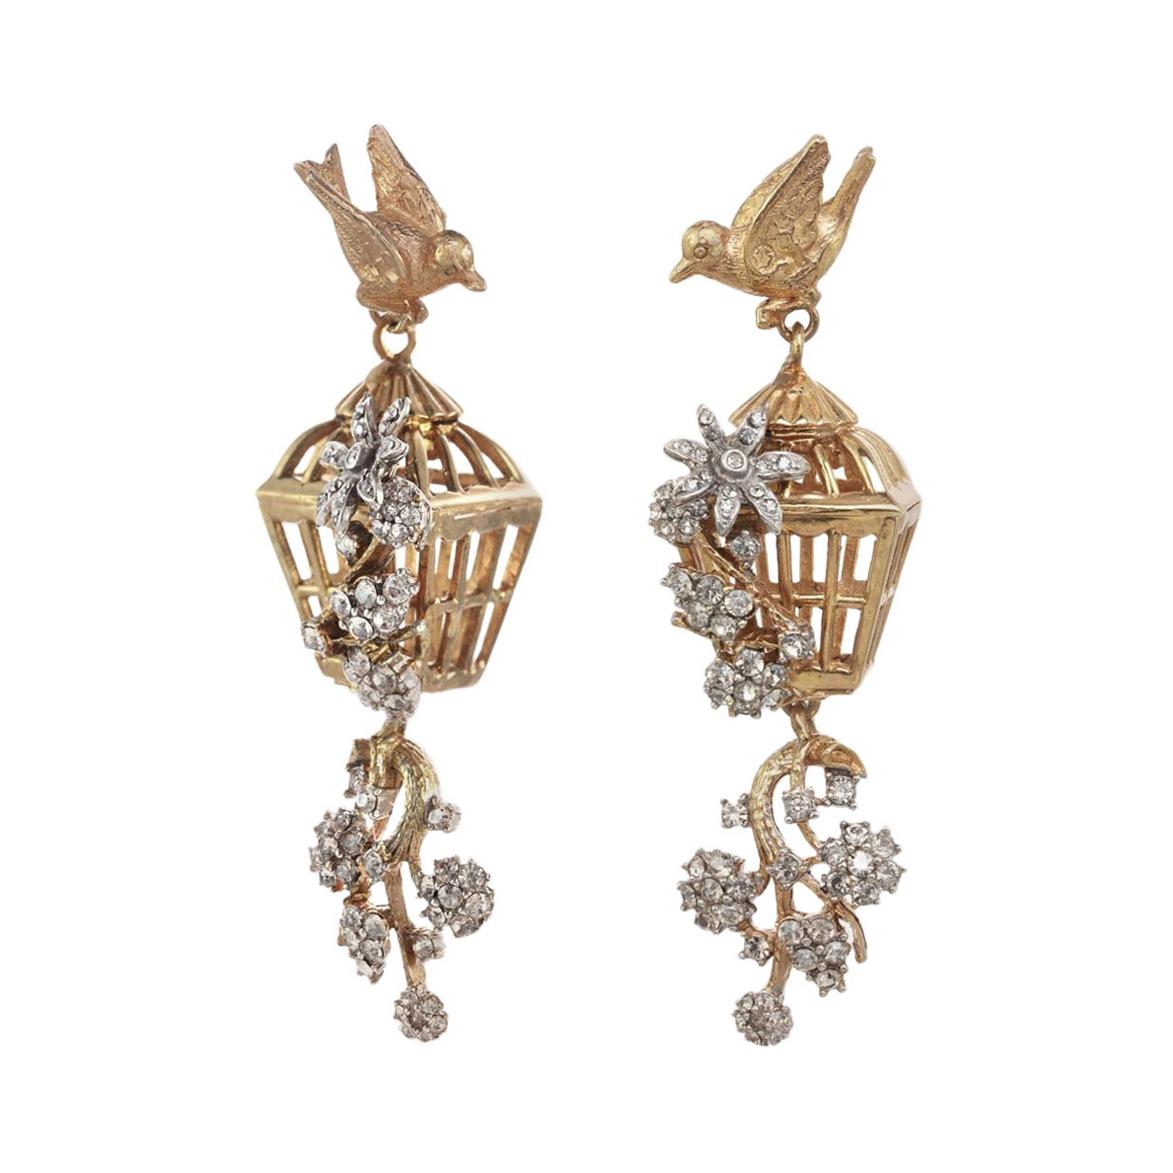 INES x CINER Romantic Birdcage PIERCED Earrings